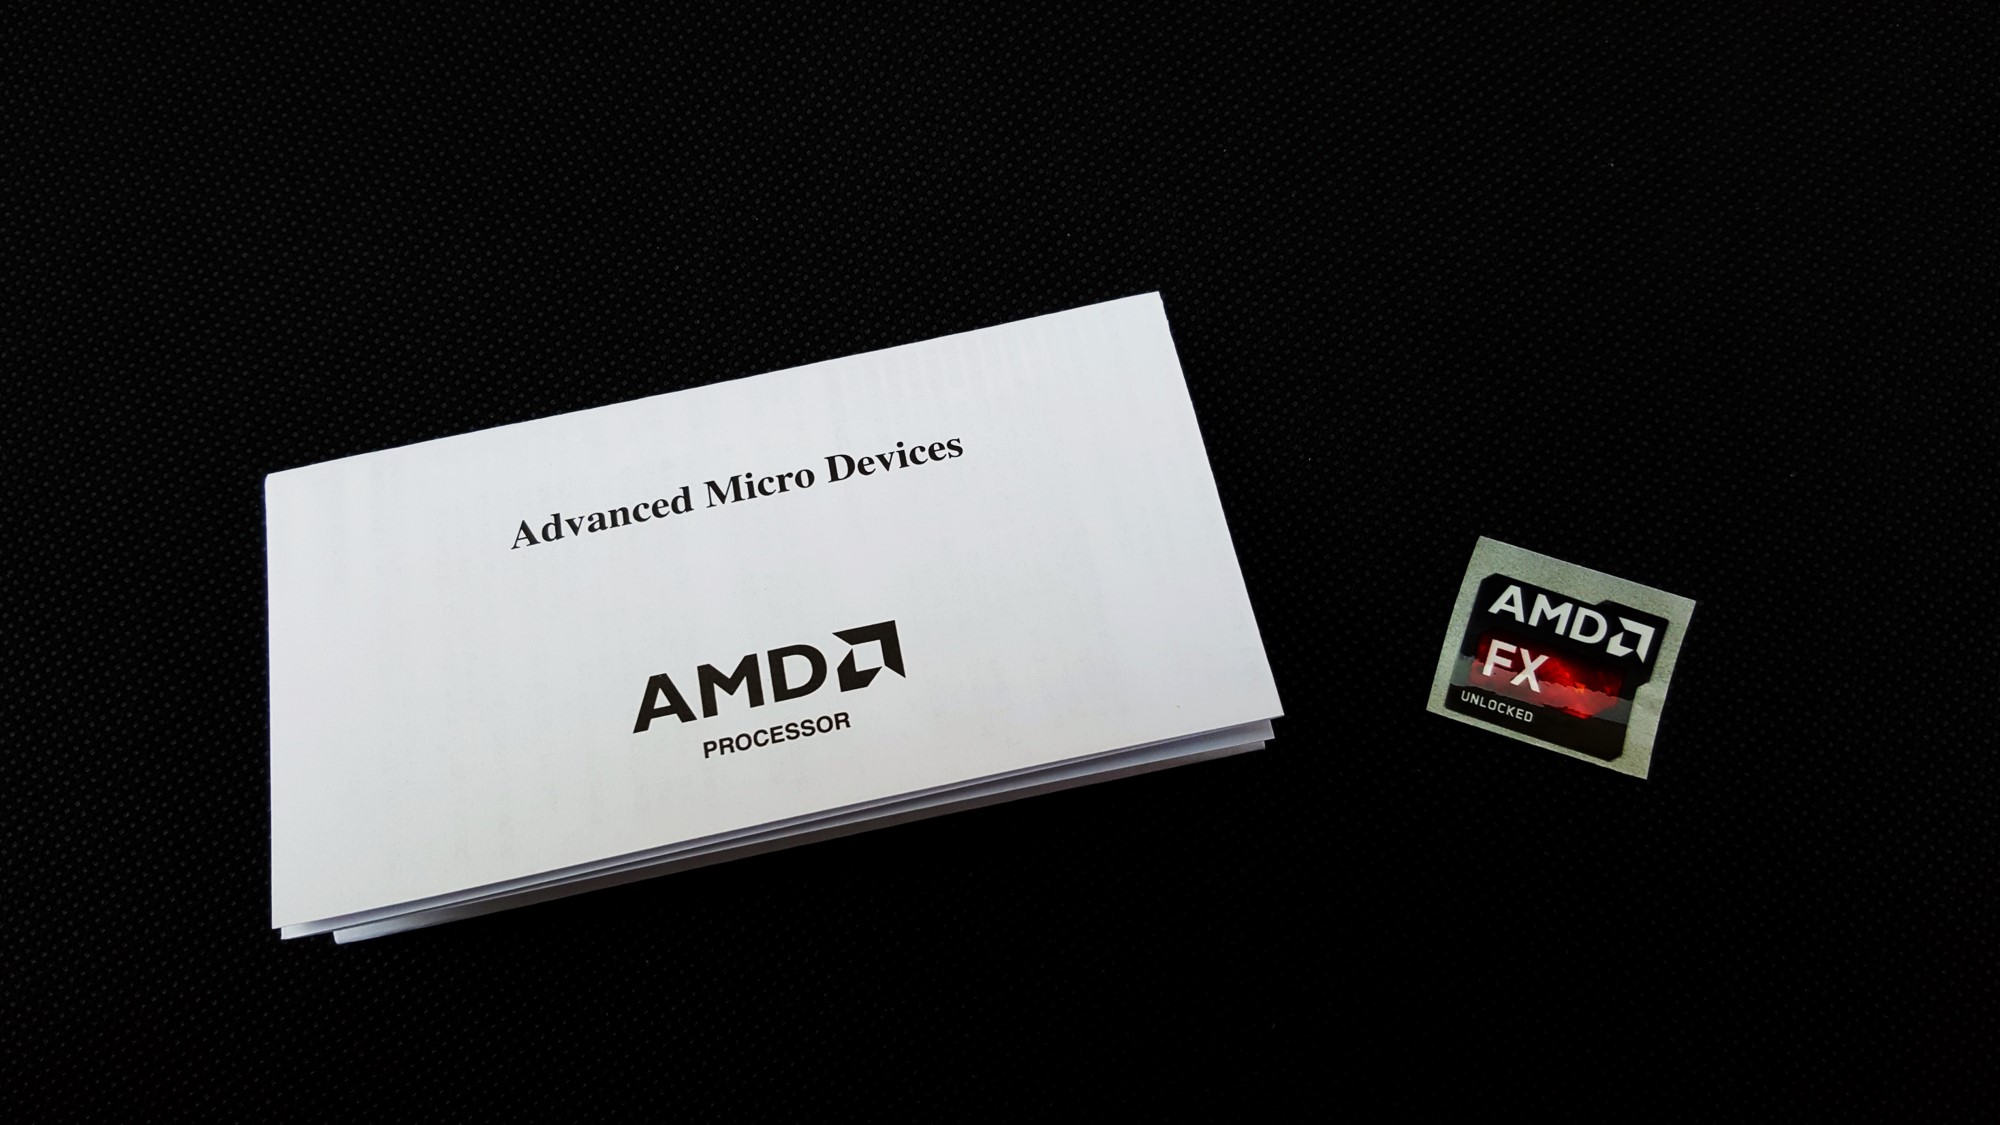 4-AMD FX 8370 With Wraith Cooler Box inside Logo